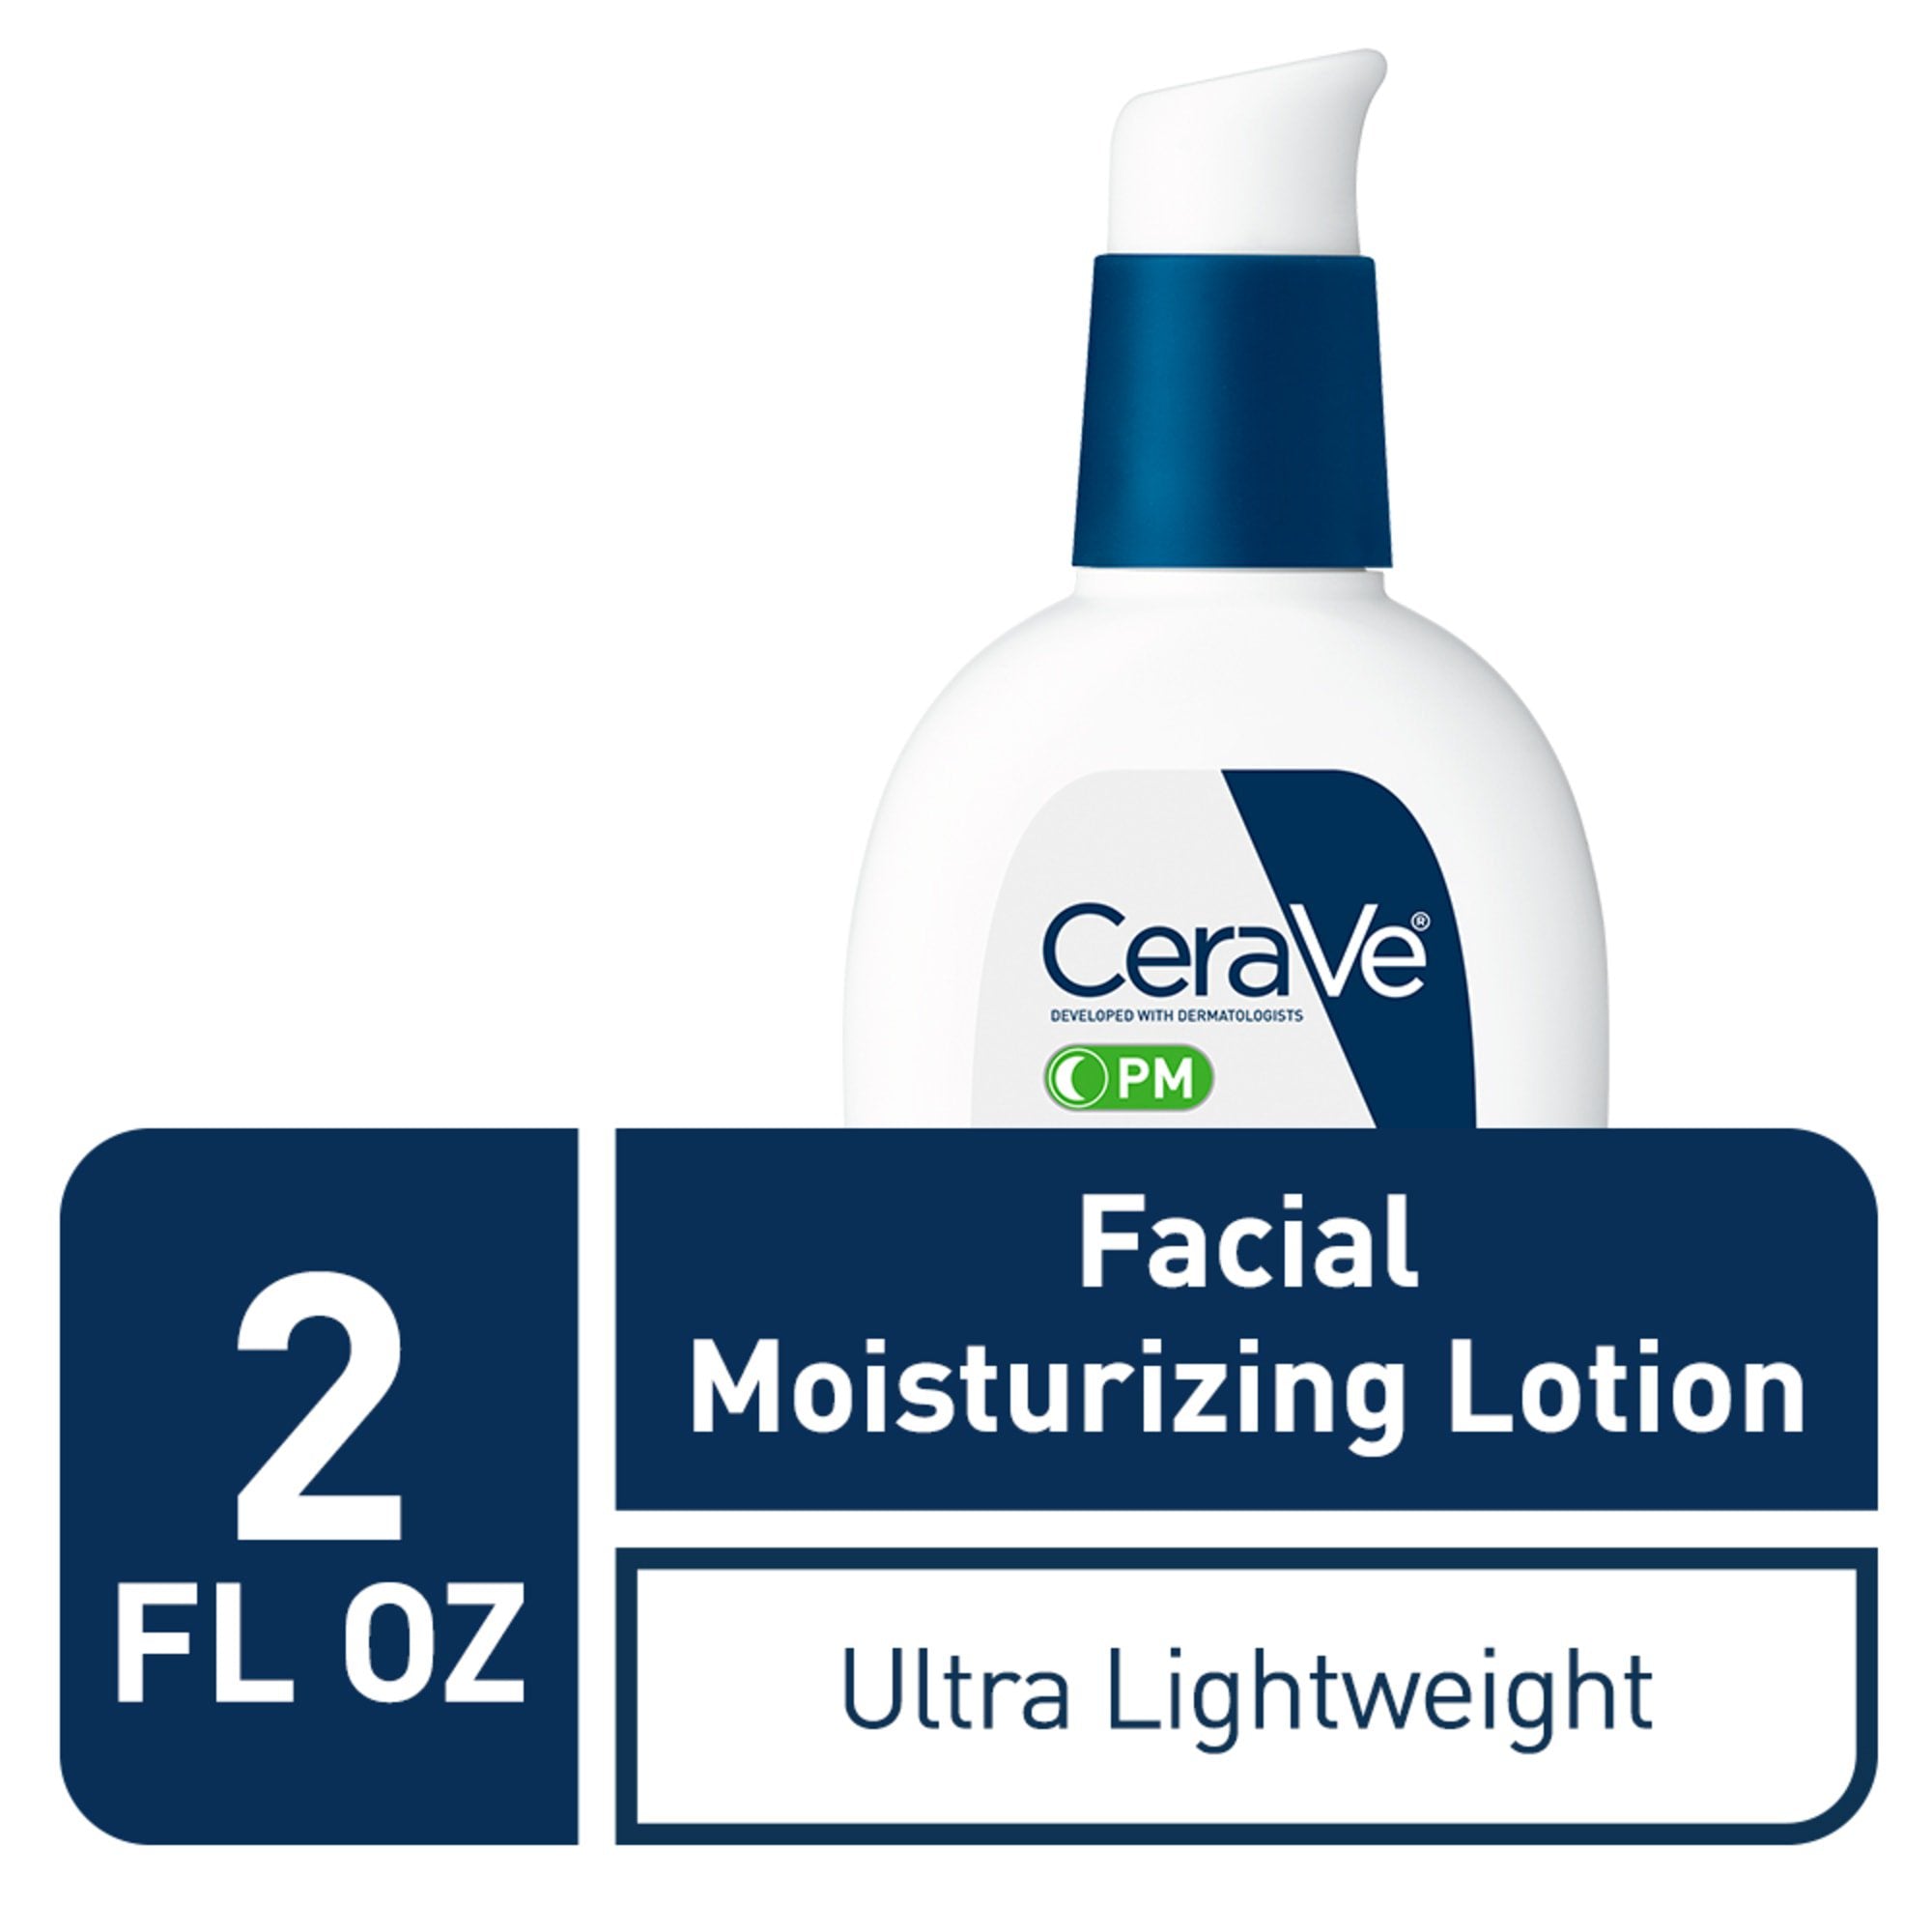 CeraVe PM Facial Moisturizing Lotion, Face Moisturizer for Night Use, 2oz & 3oz